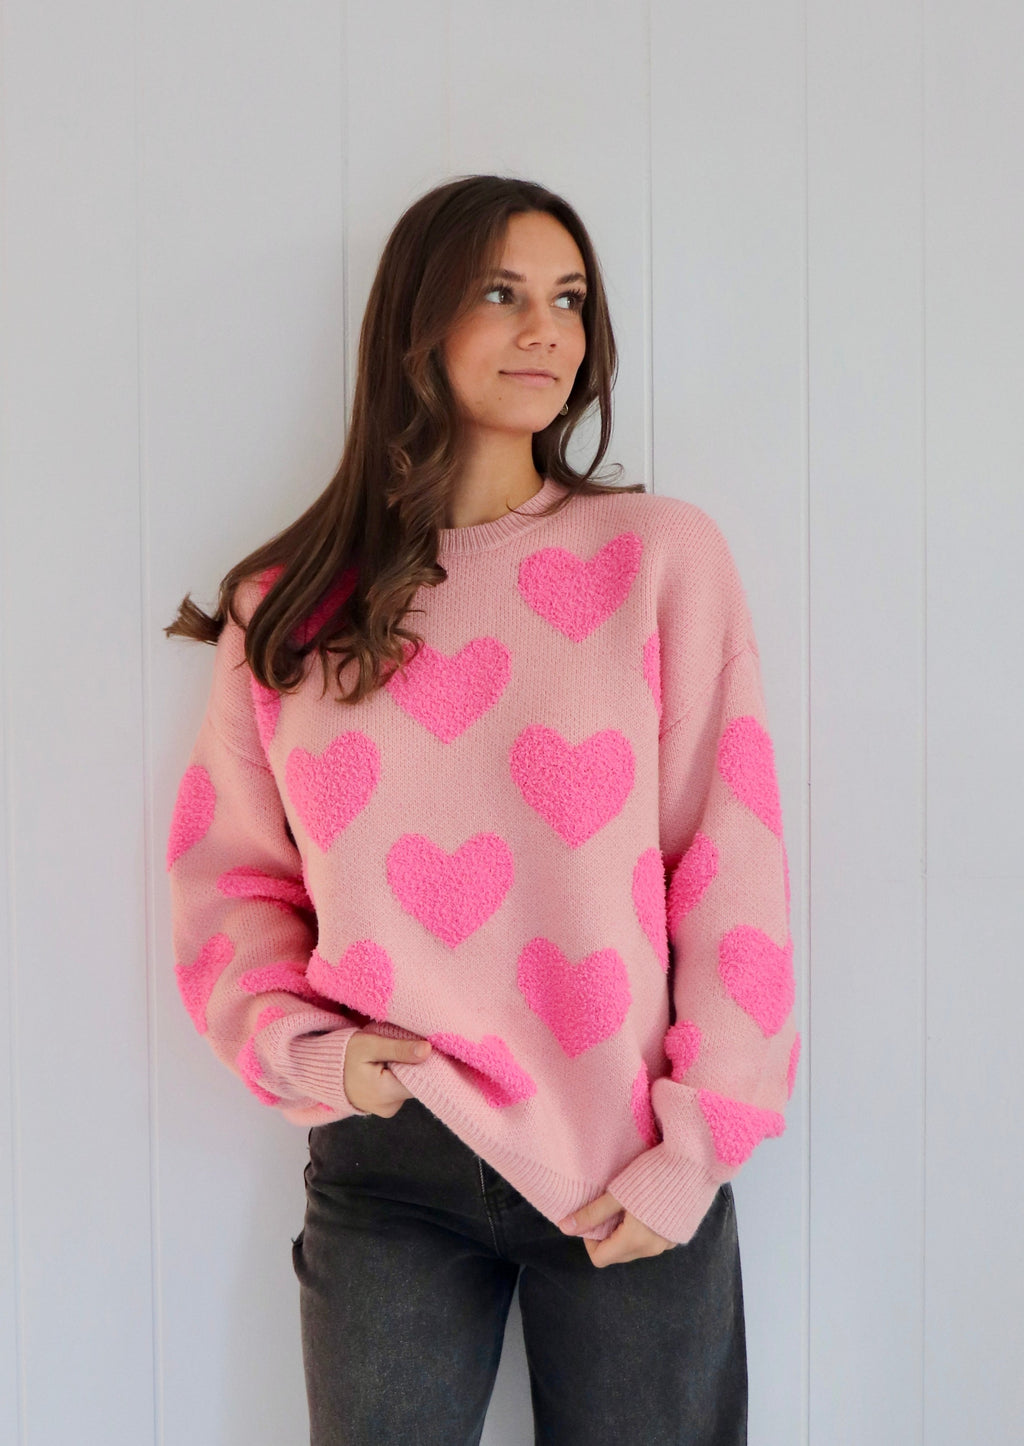 Heart Jacquard Knit Sweater